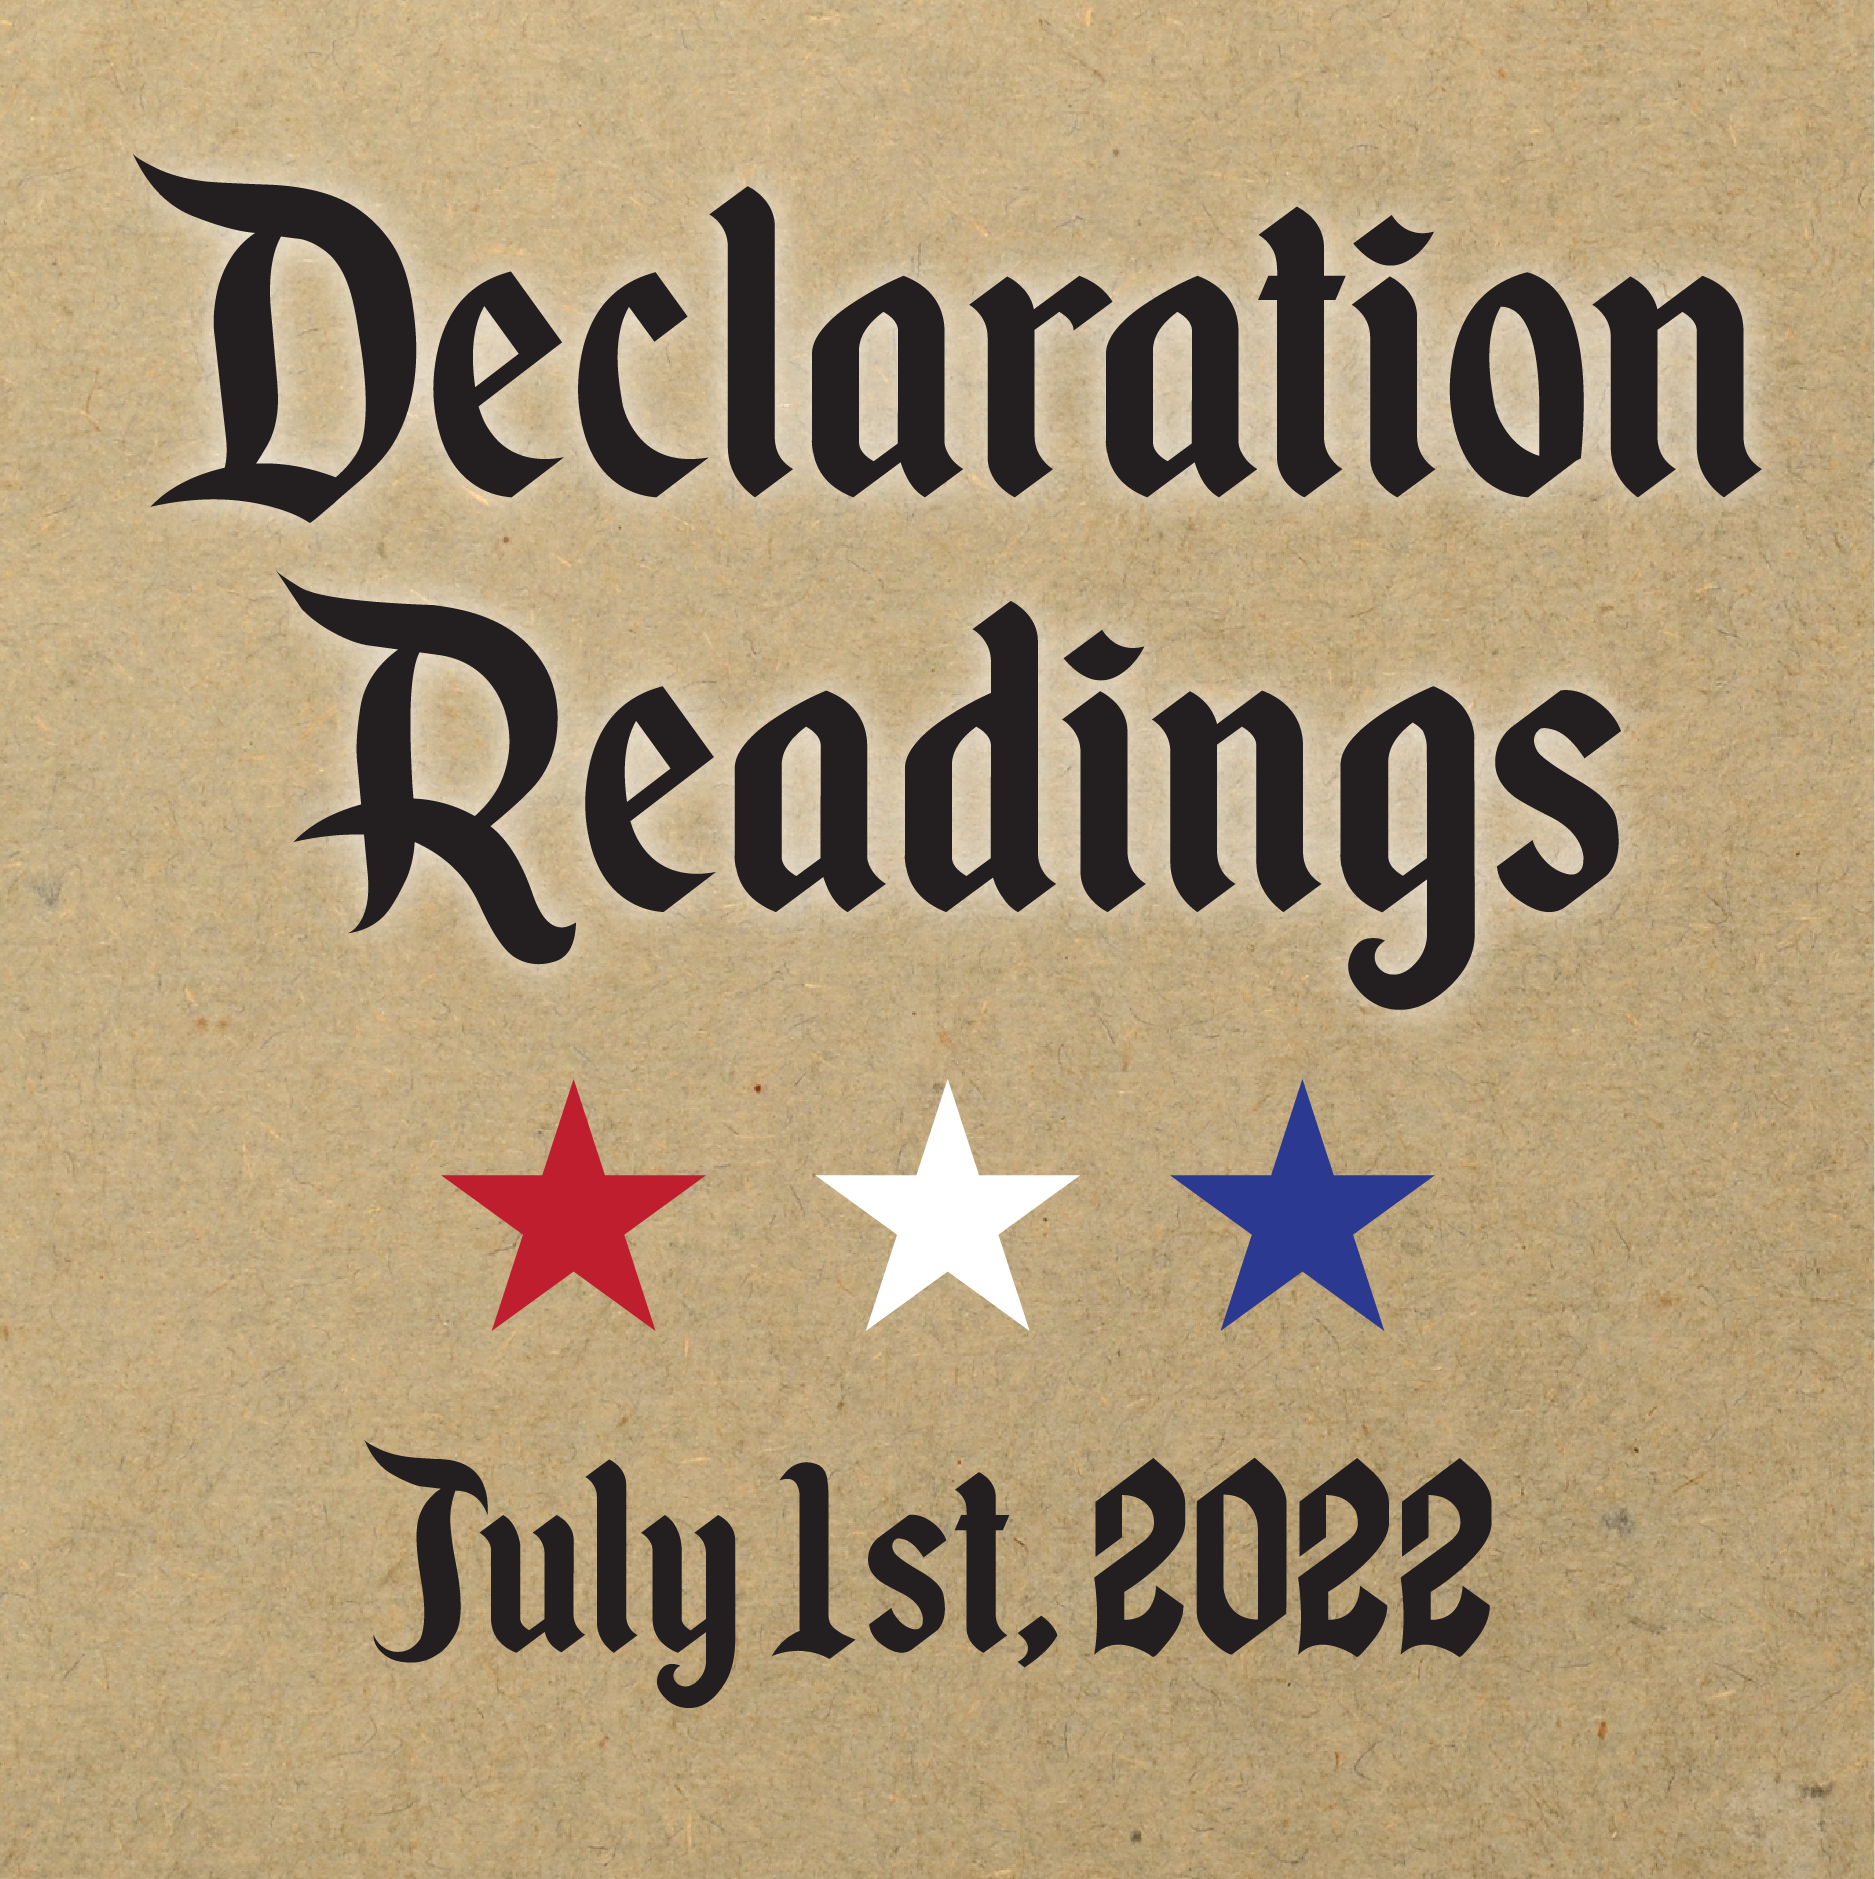 TCDLA Declaration Readings